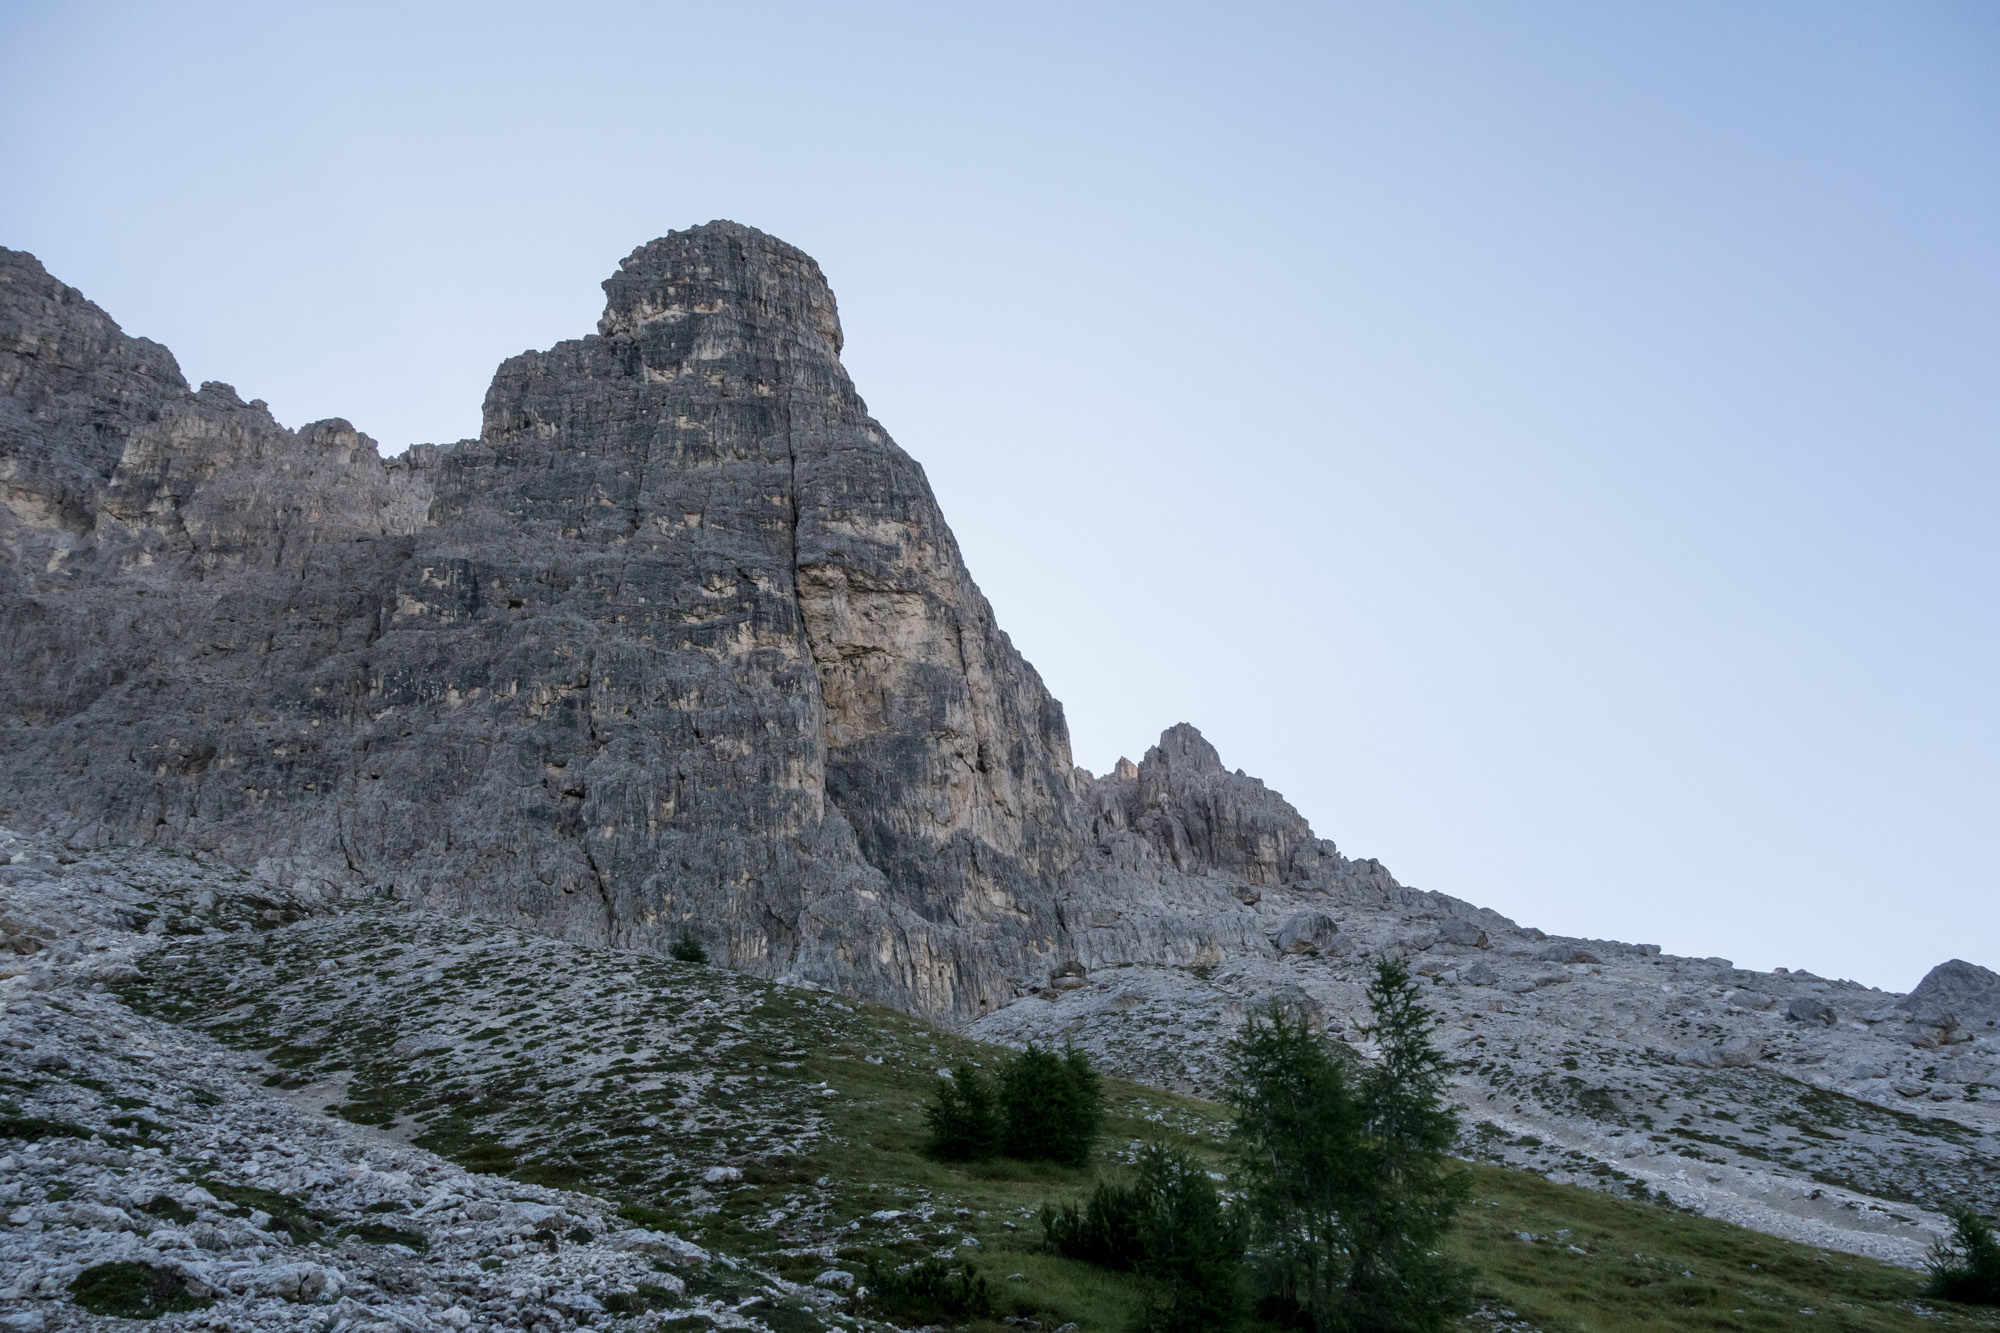 alpine summer rock climbing on the comici punta col de varda in the dolomites